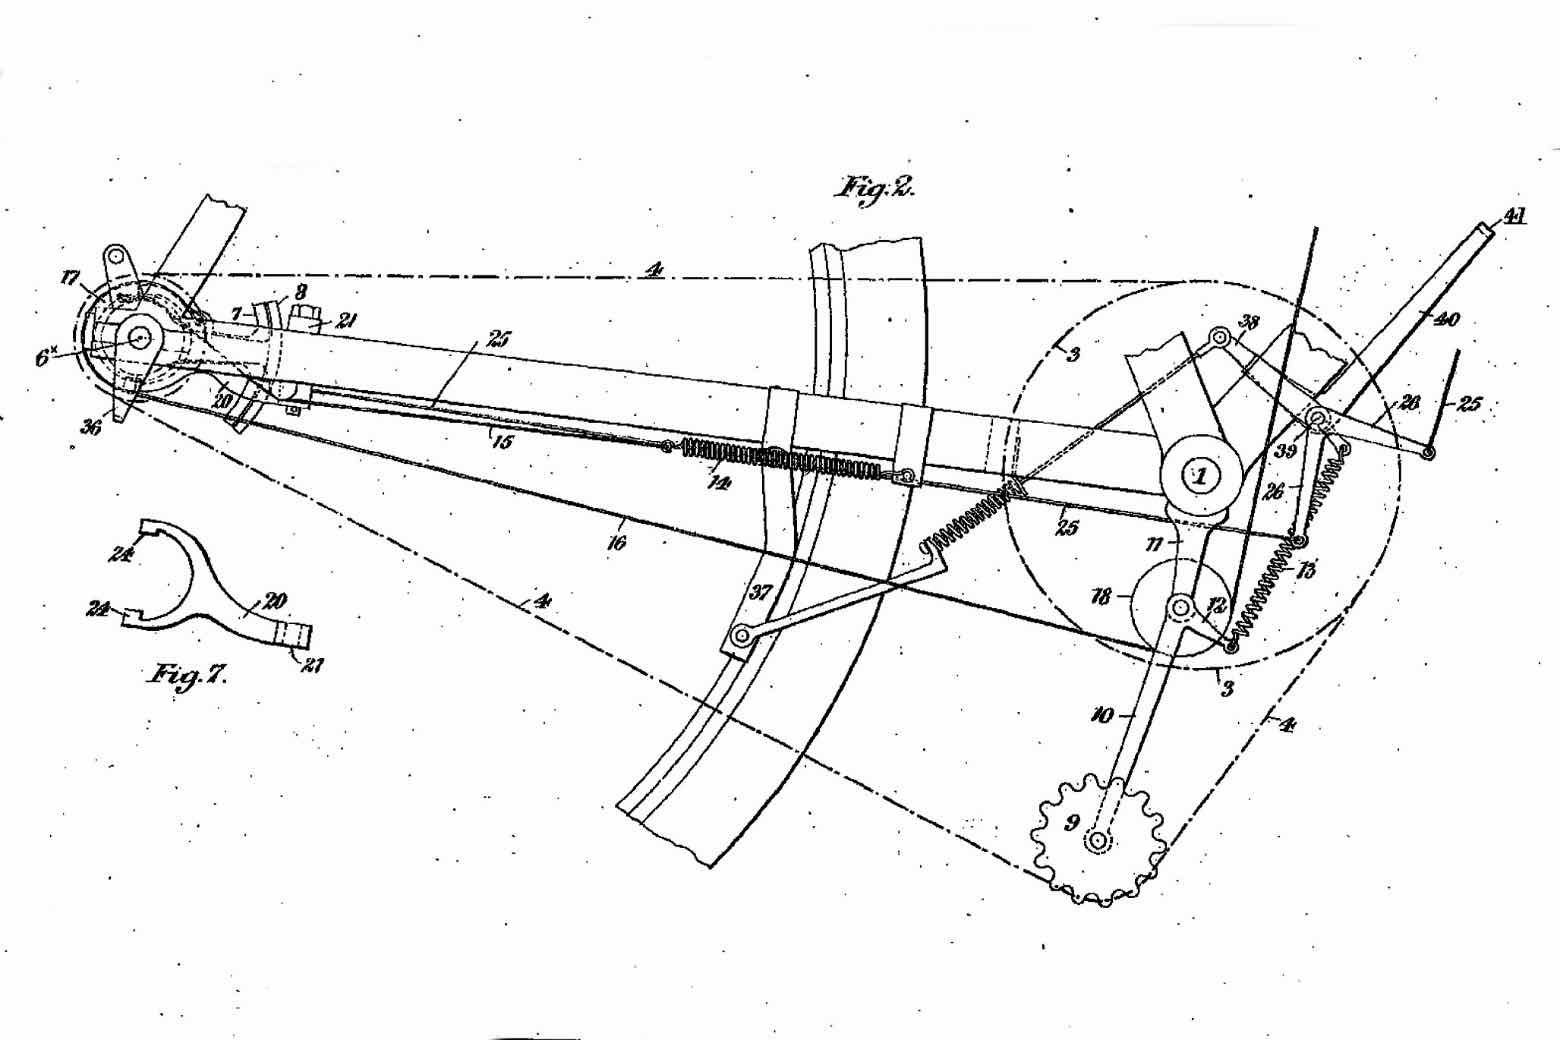 UK Patent 1899 5,317 - Gradient main image